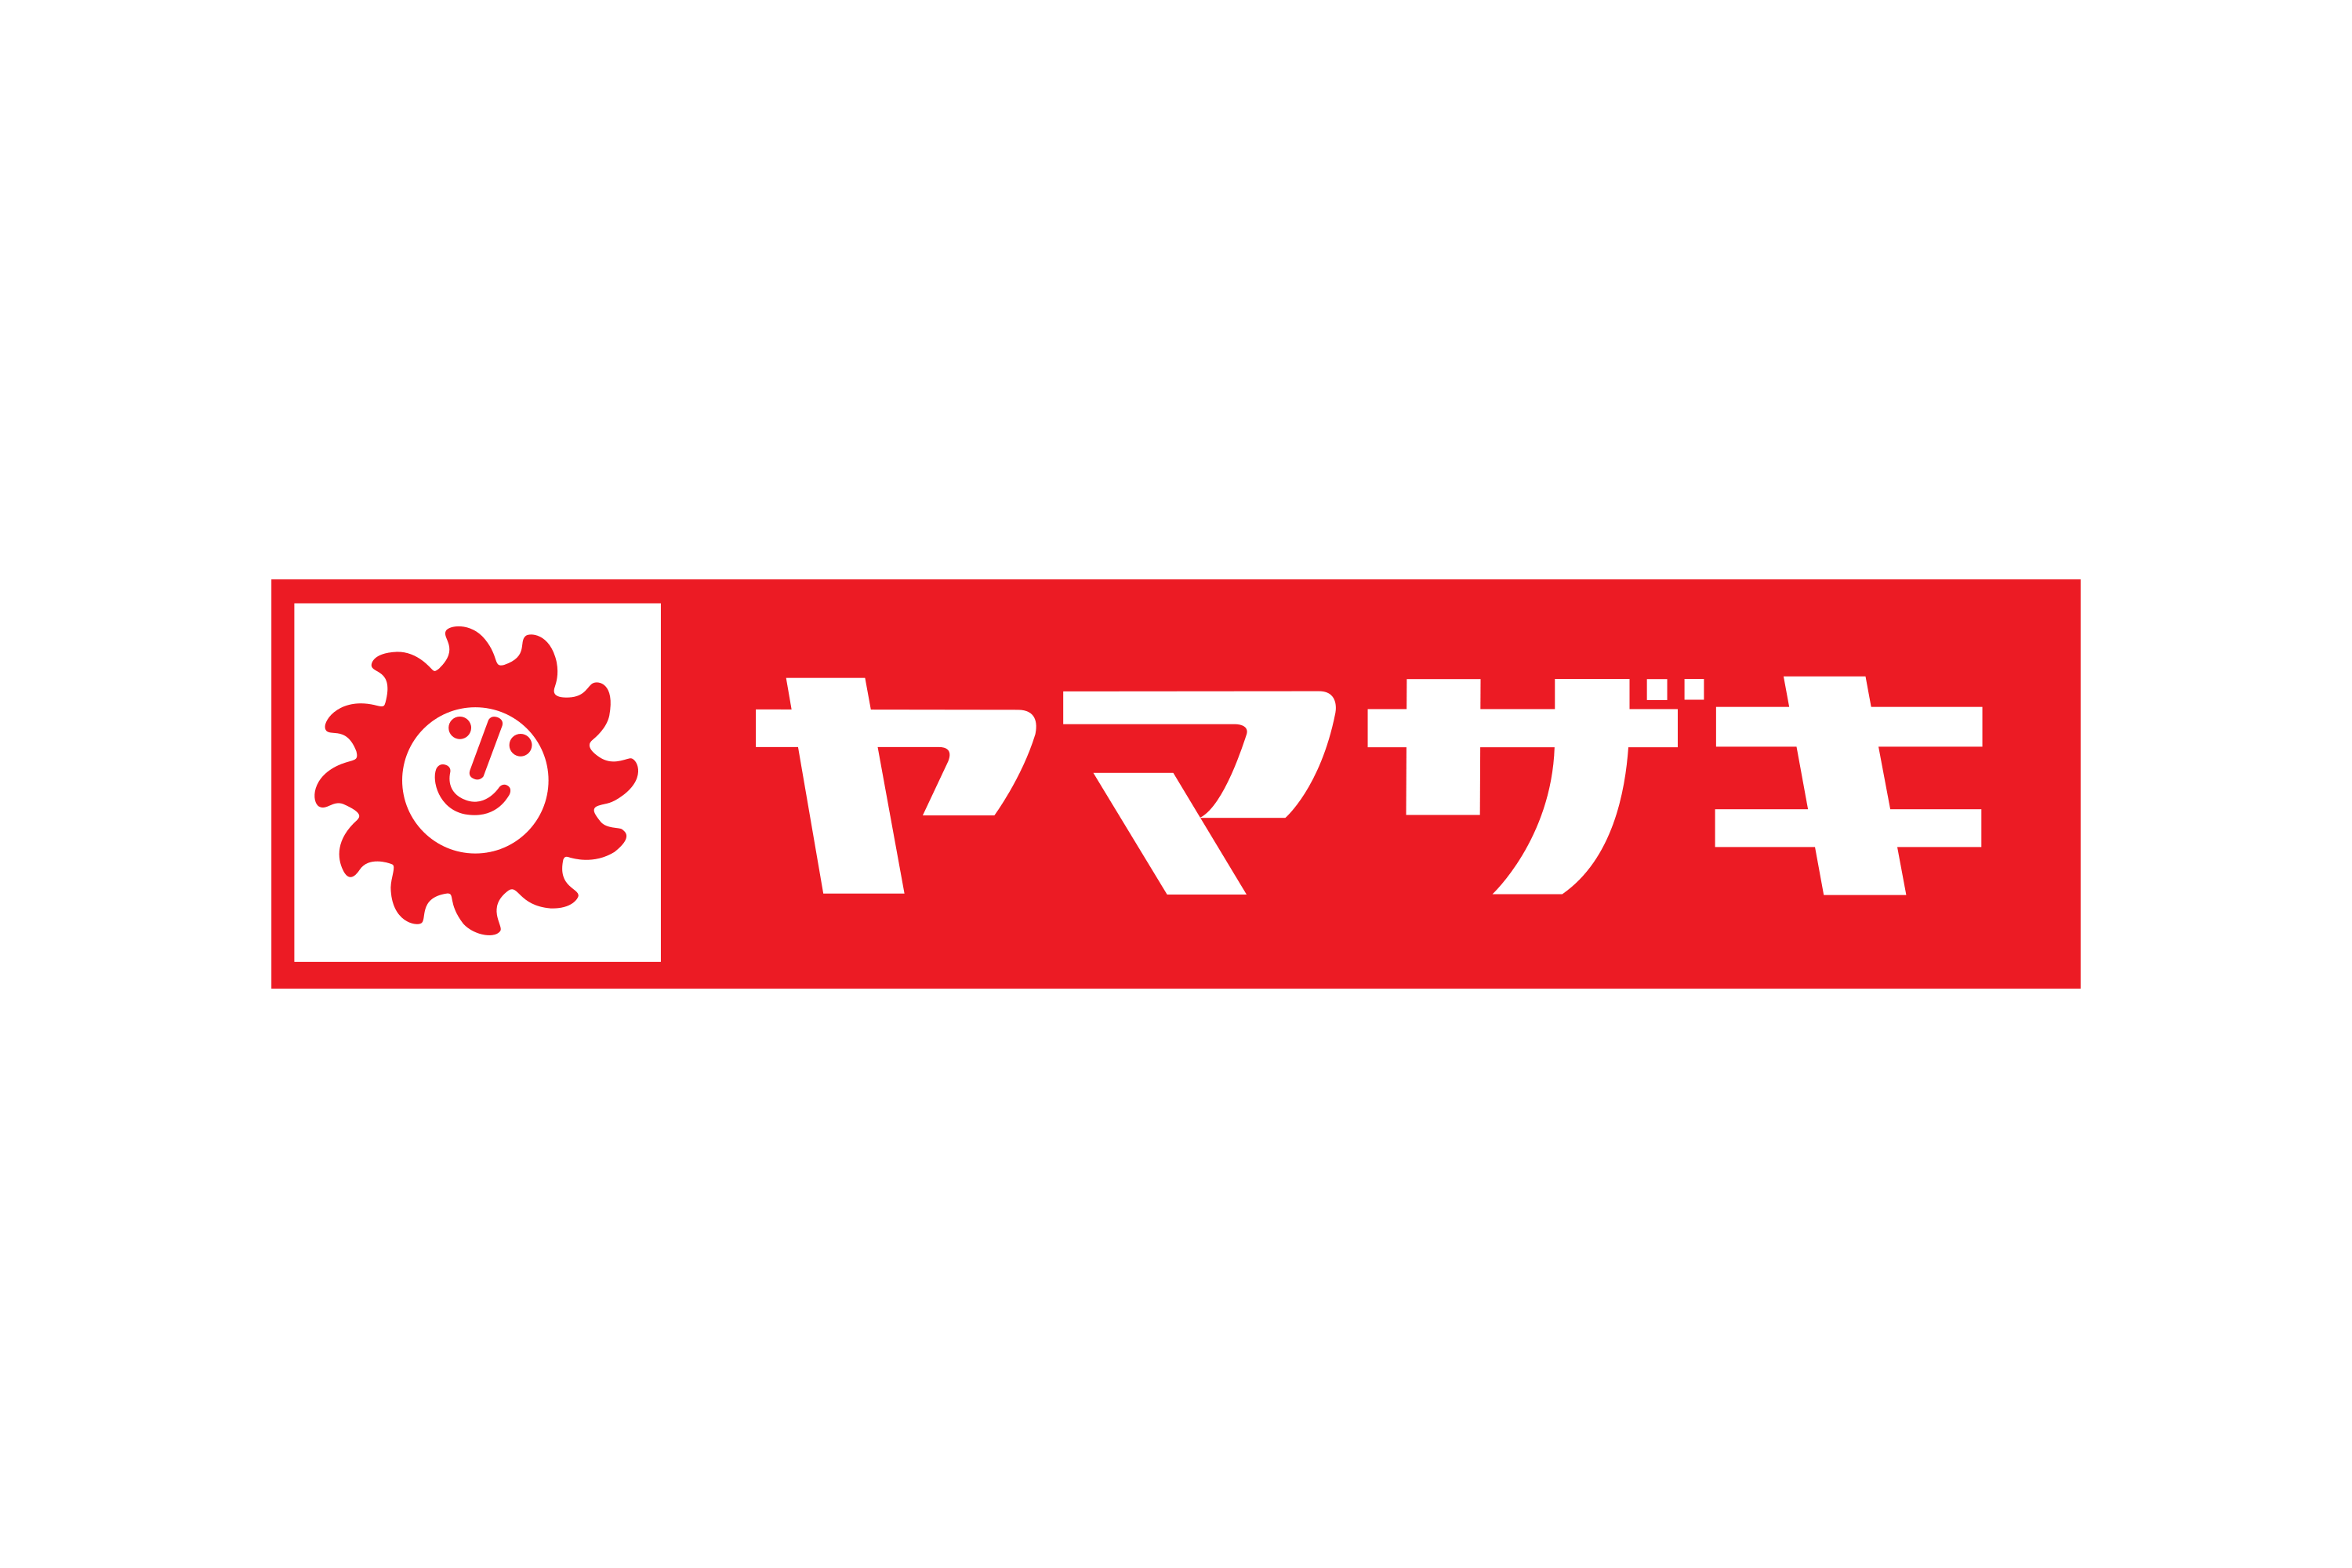 Yamazaki Baking Logo